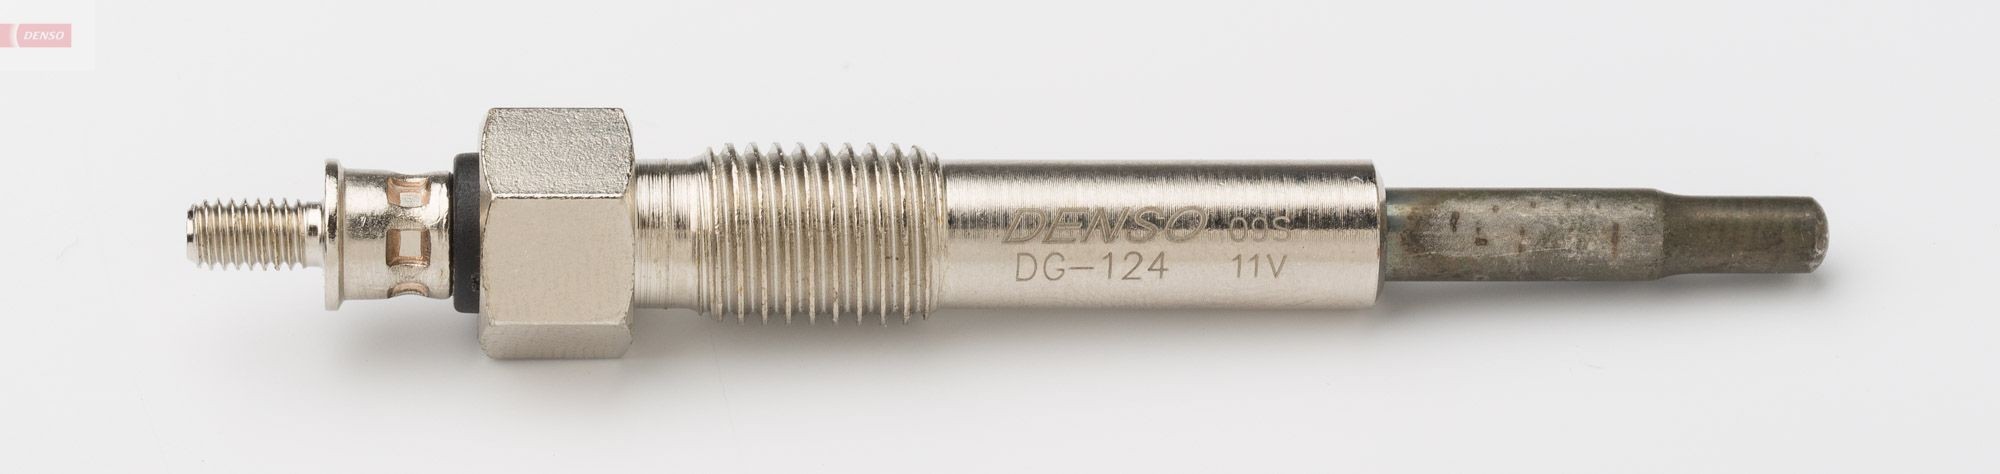 DENSO DG-124 Glow plug 11V M10x1.25, Metal glow plug, 87 mm, 10 Nm